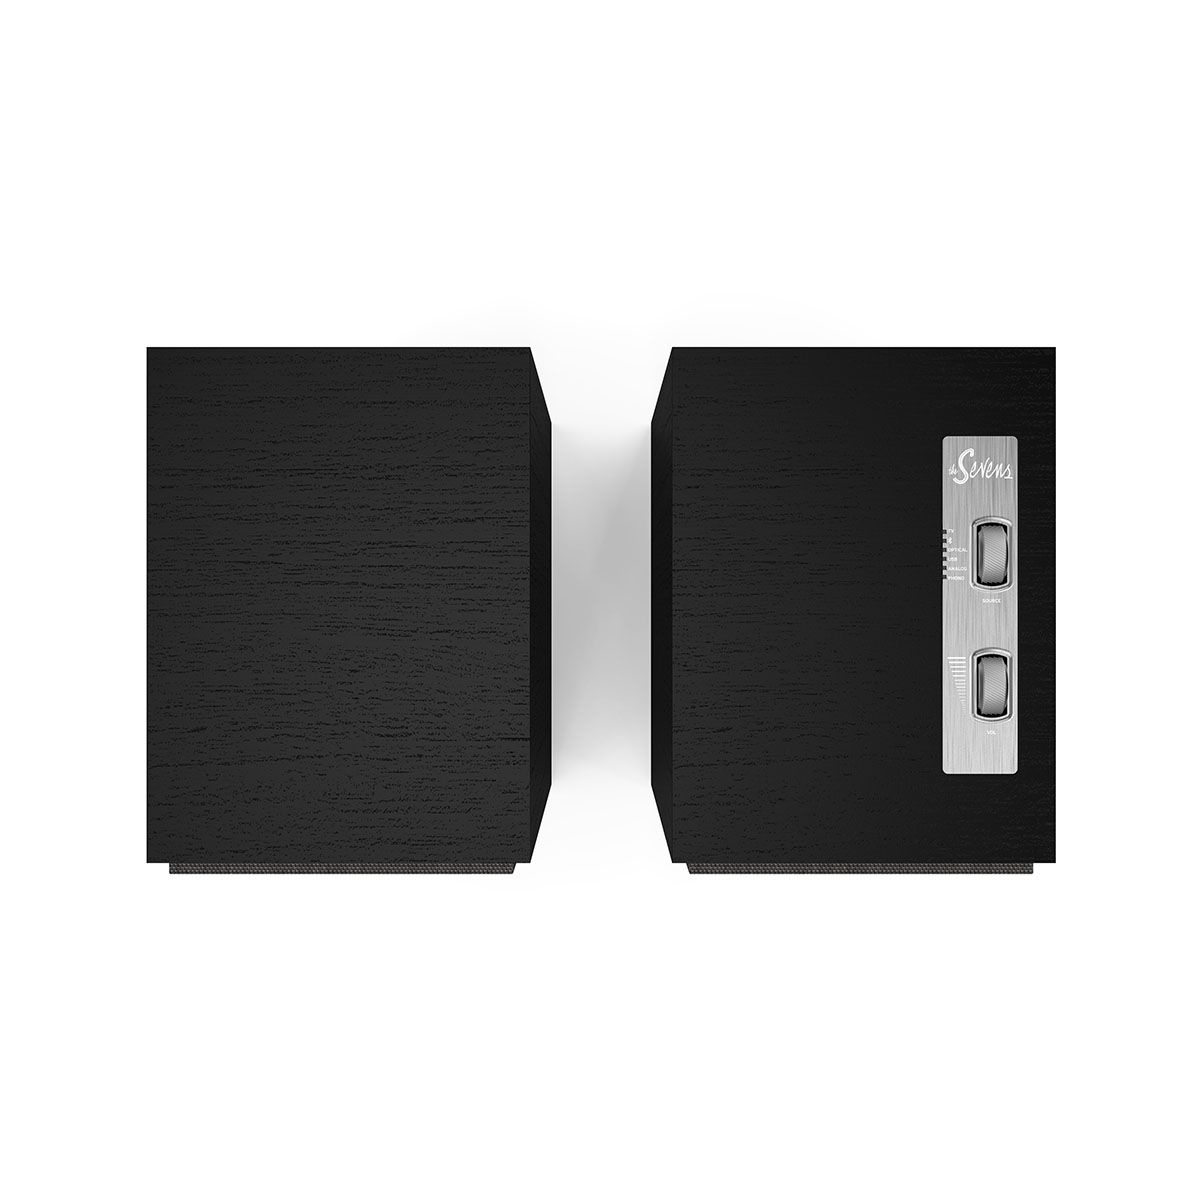 Klipsch The Sevens Powered Speakers - Pair - black top view